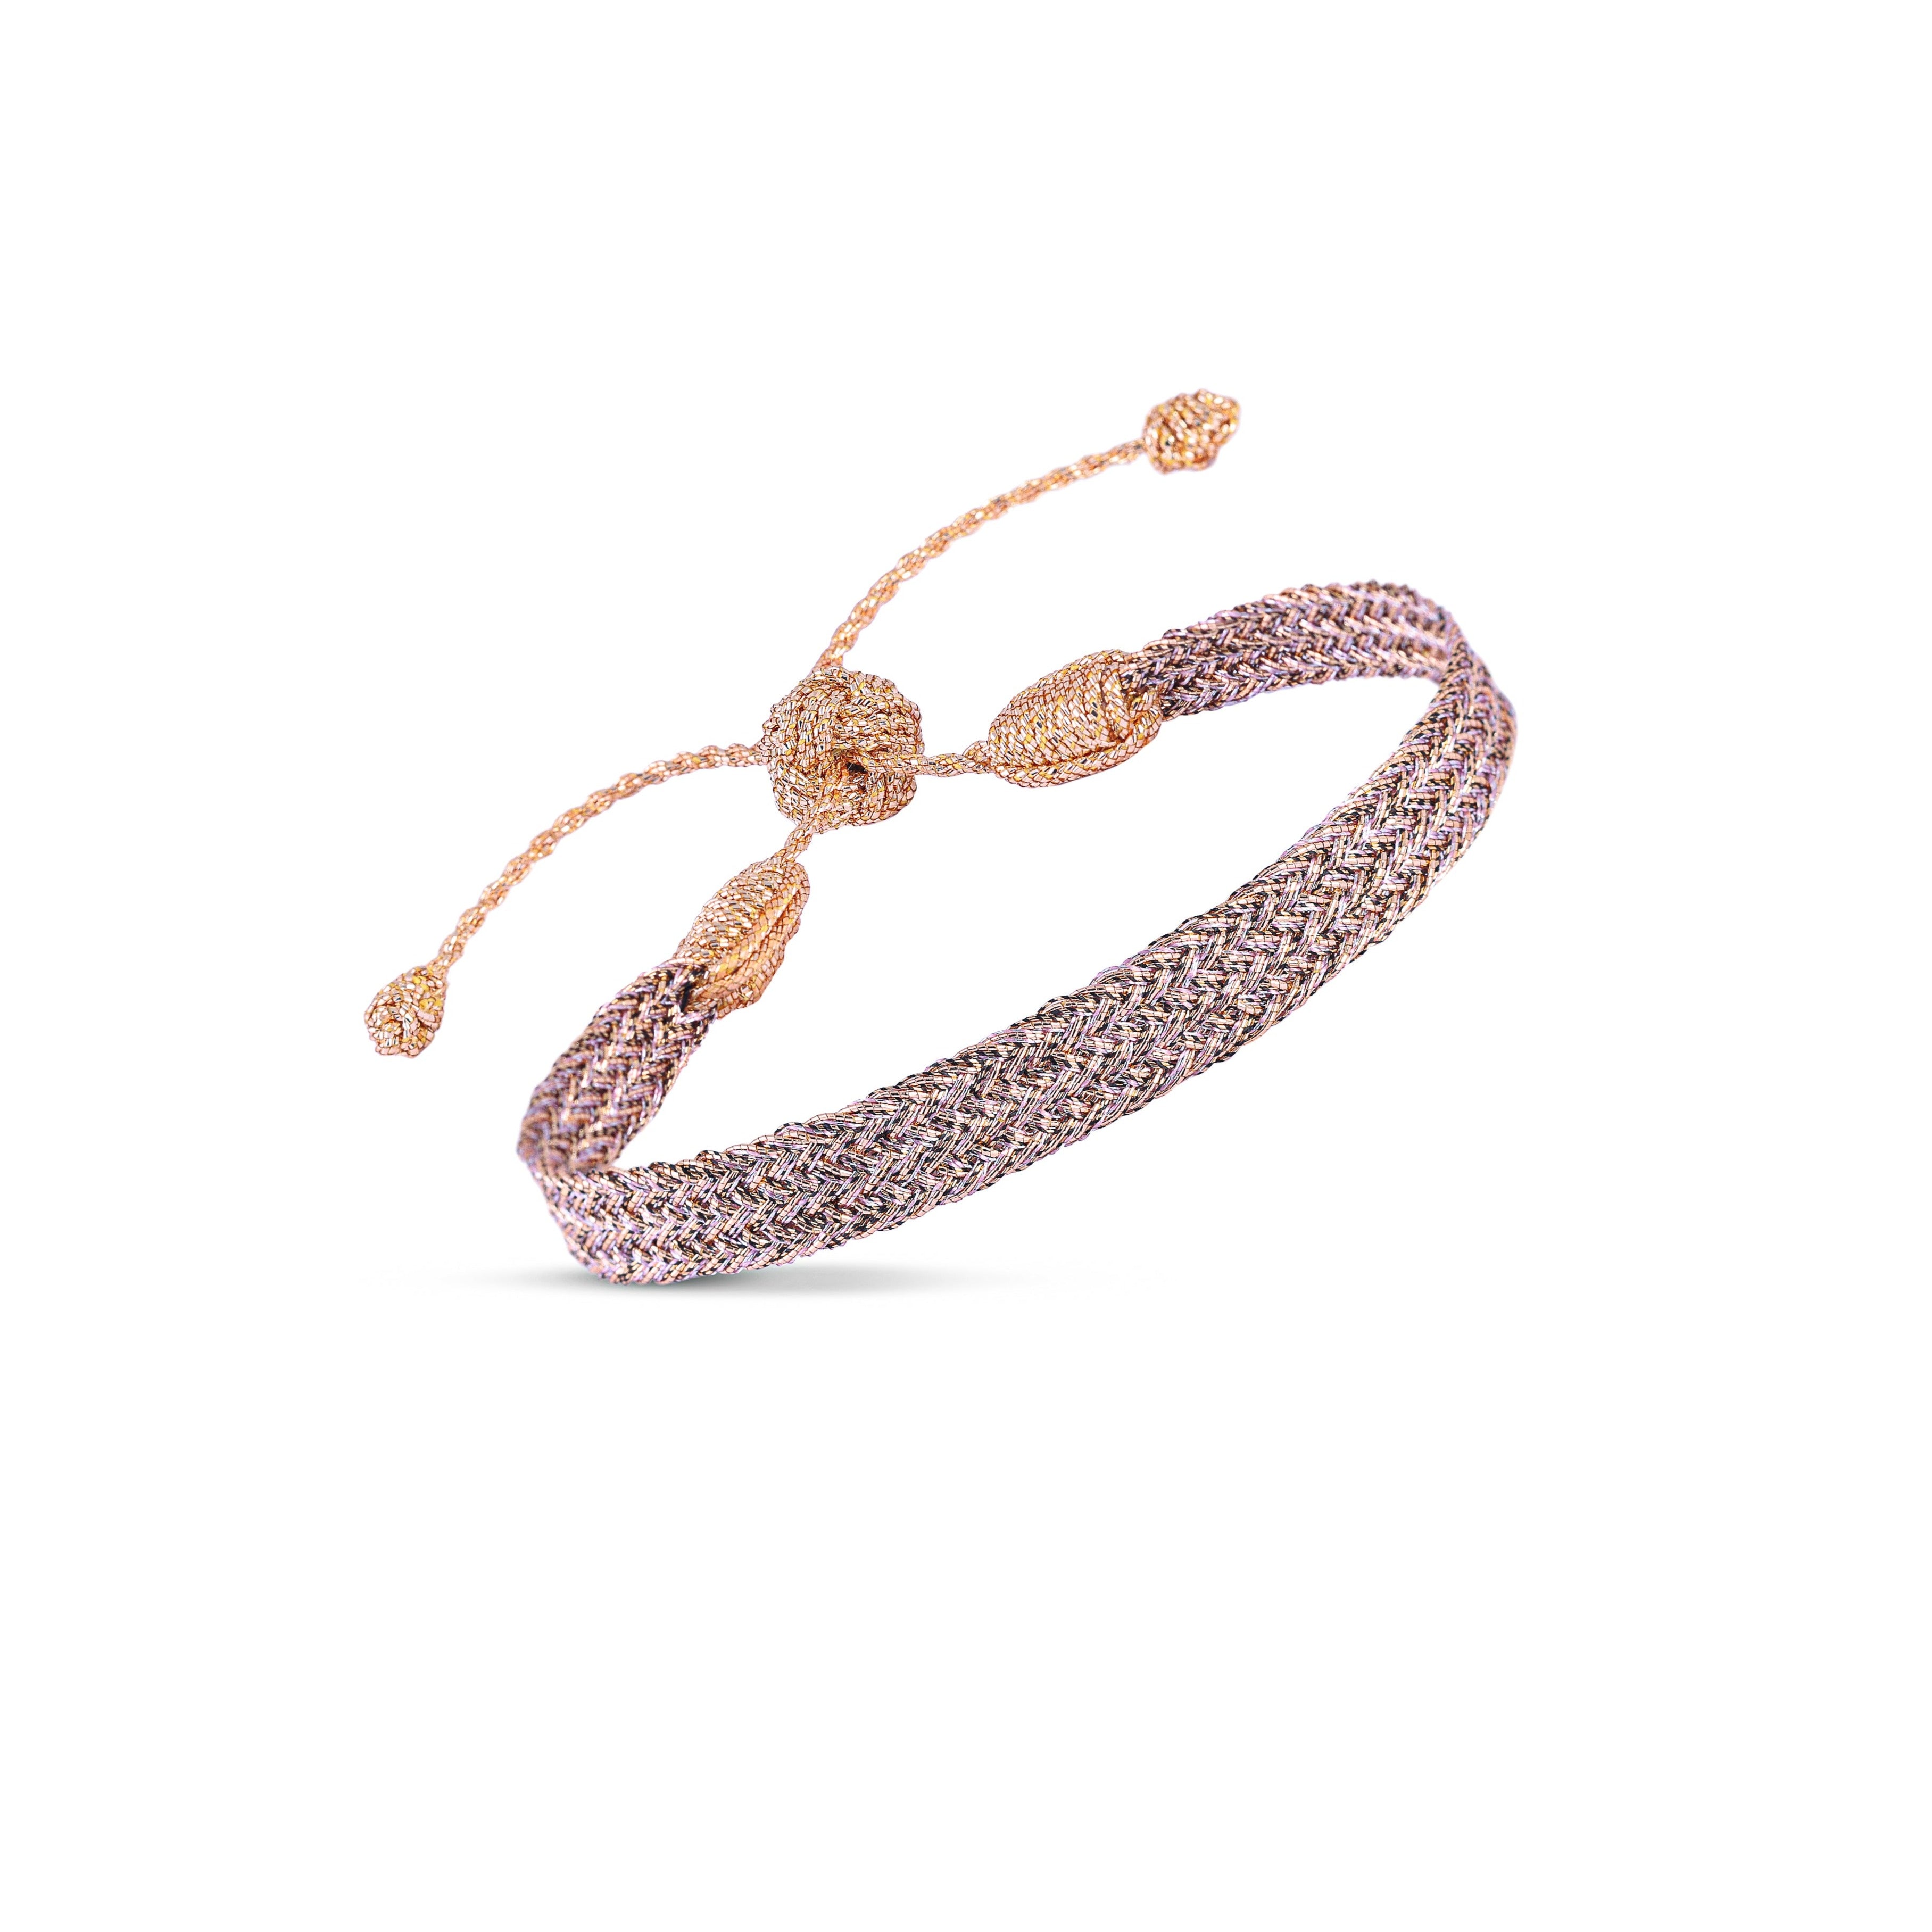 Ania n°1 Bracelet in Peach Lavender